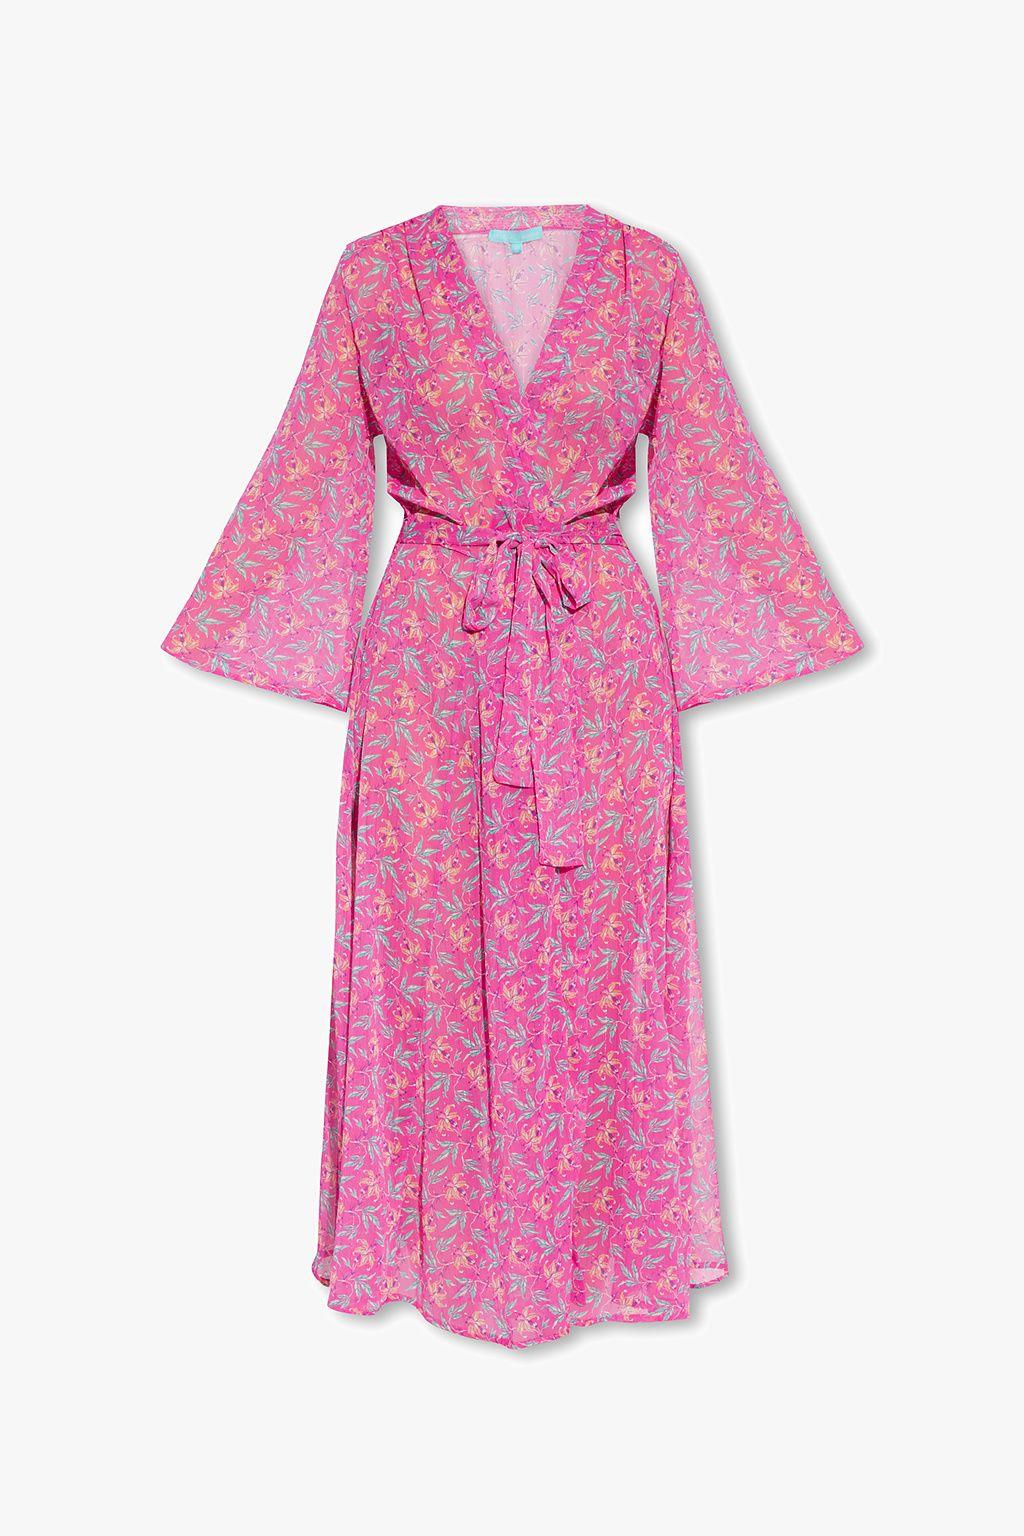 Melissa Odabash 'marianna' Dress in Pink | Lyst